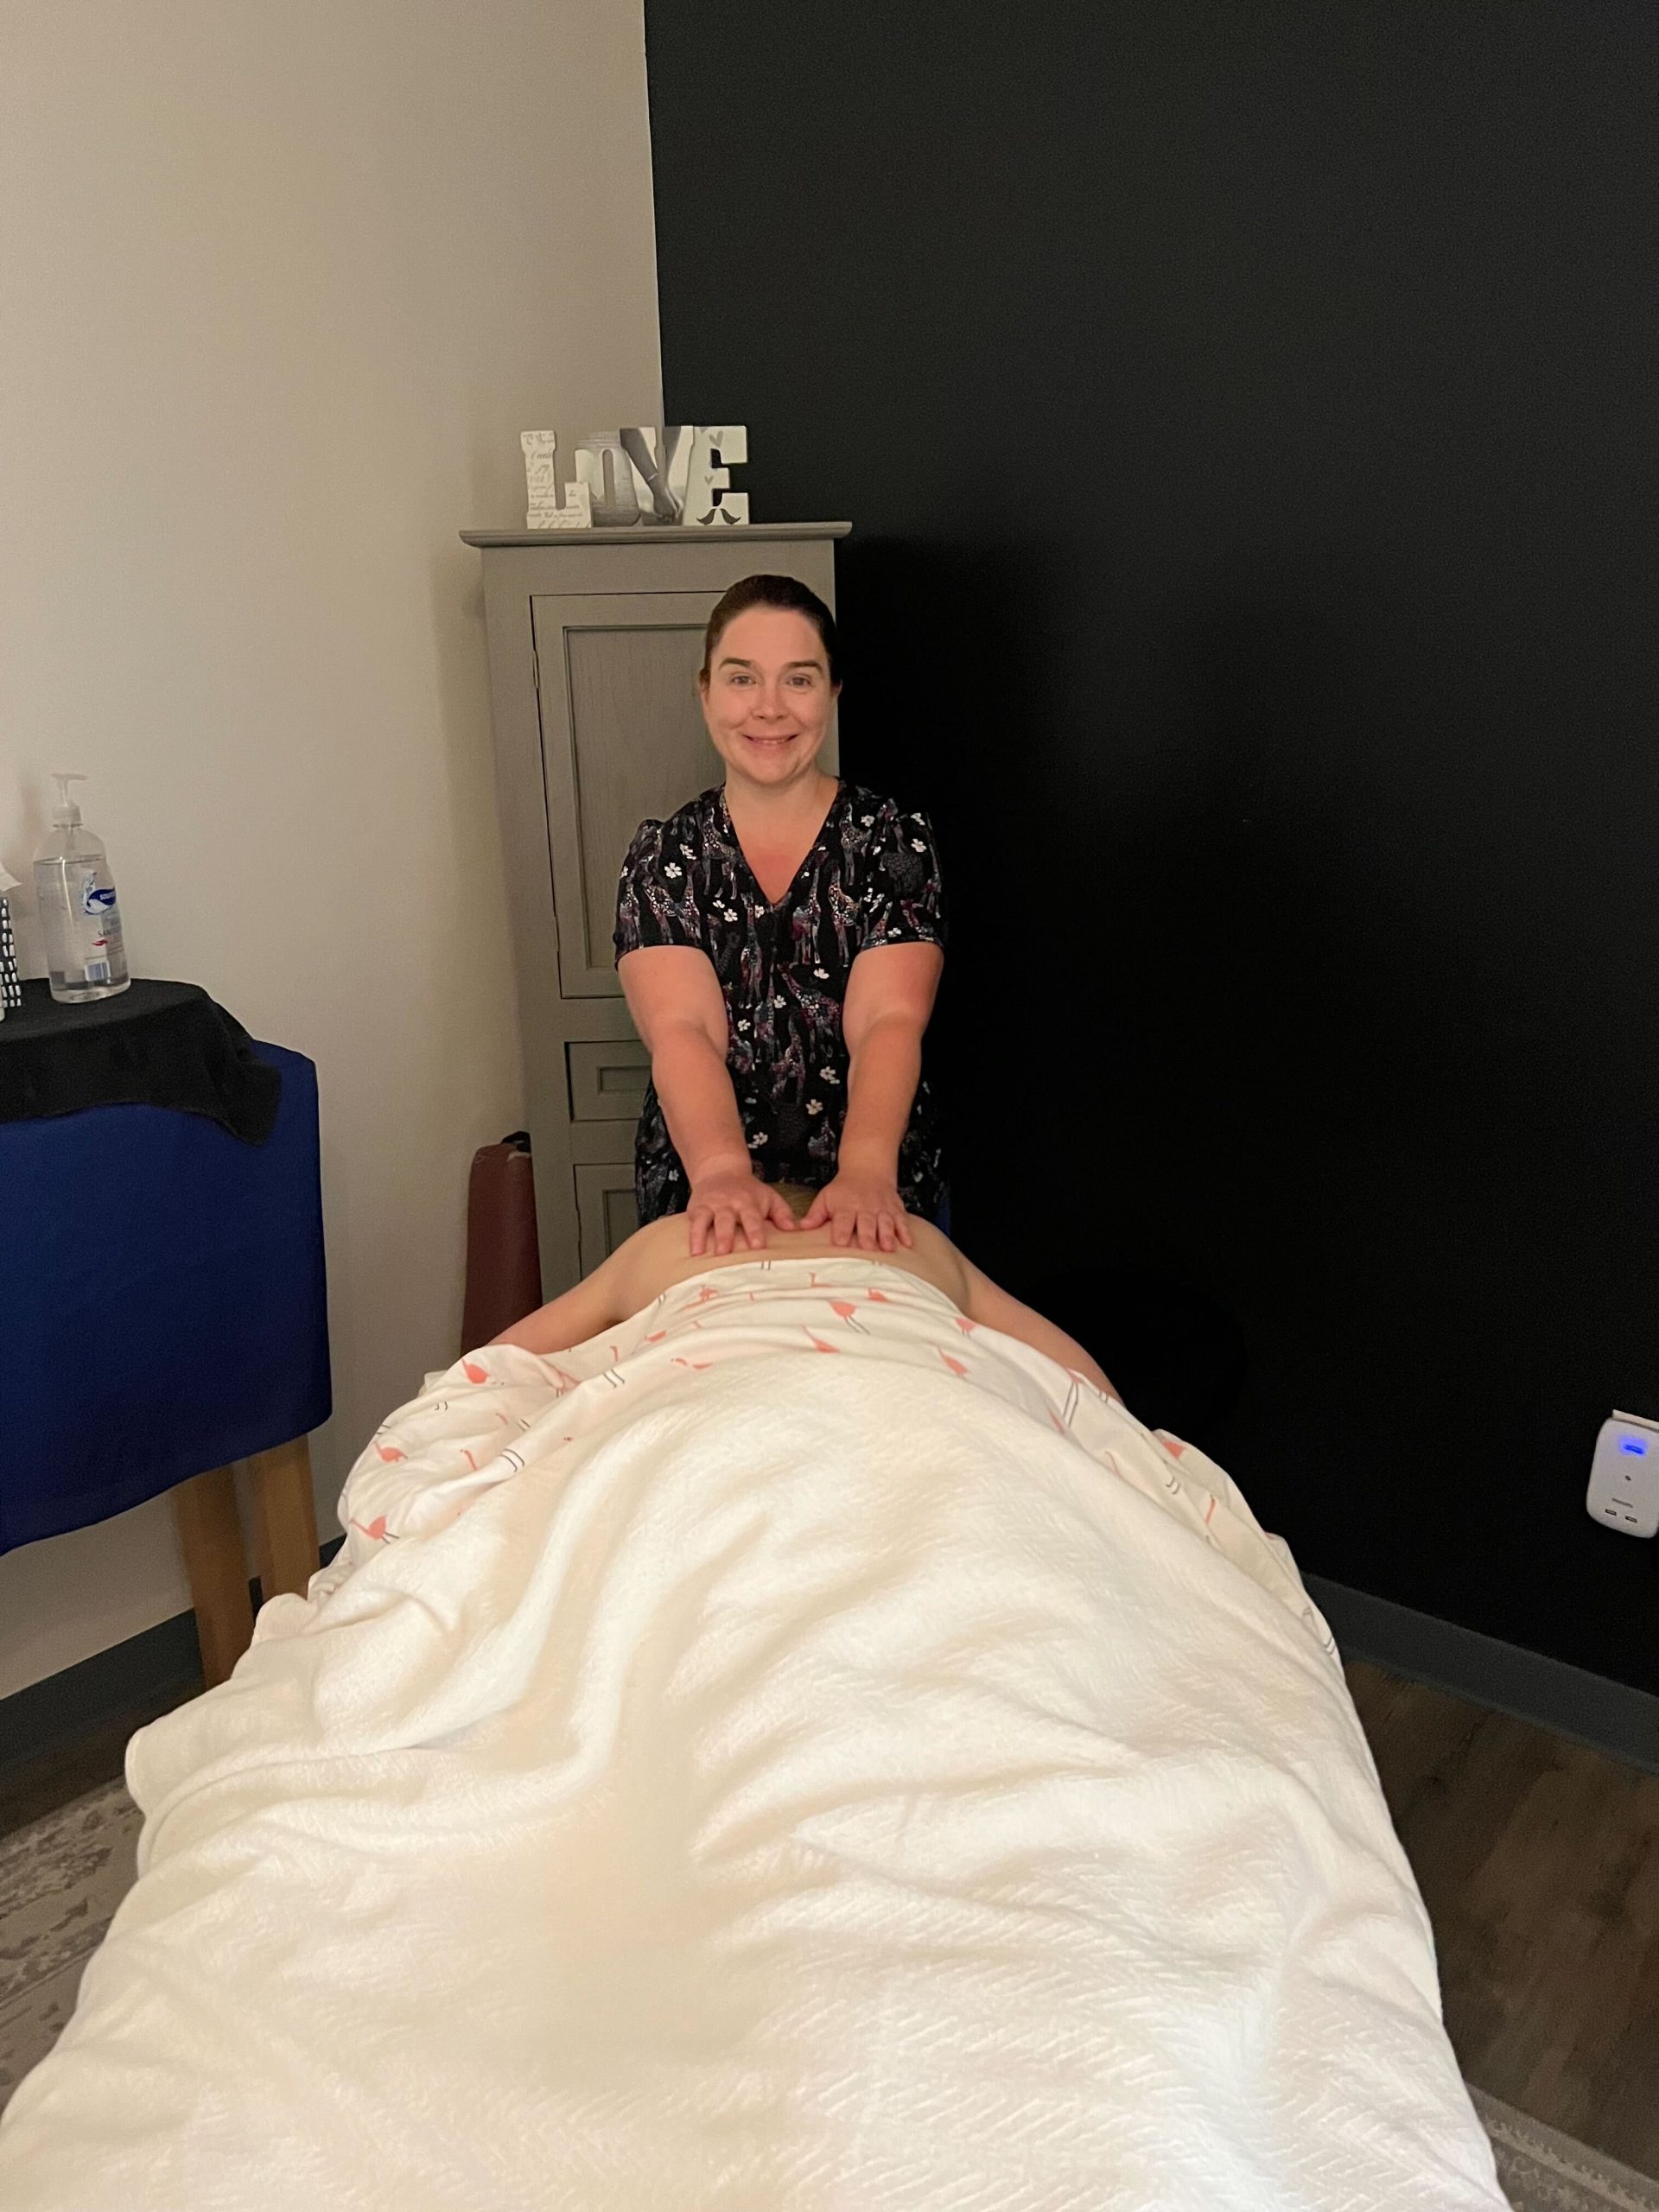 Deep Tissue Therapeutic Massage